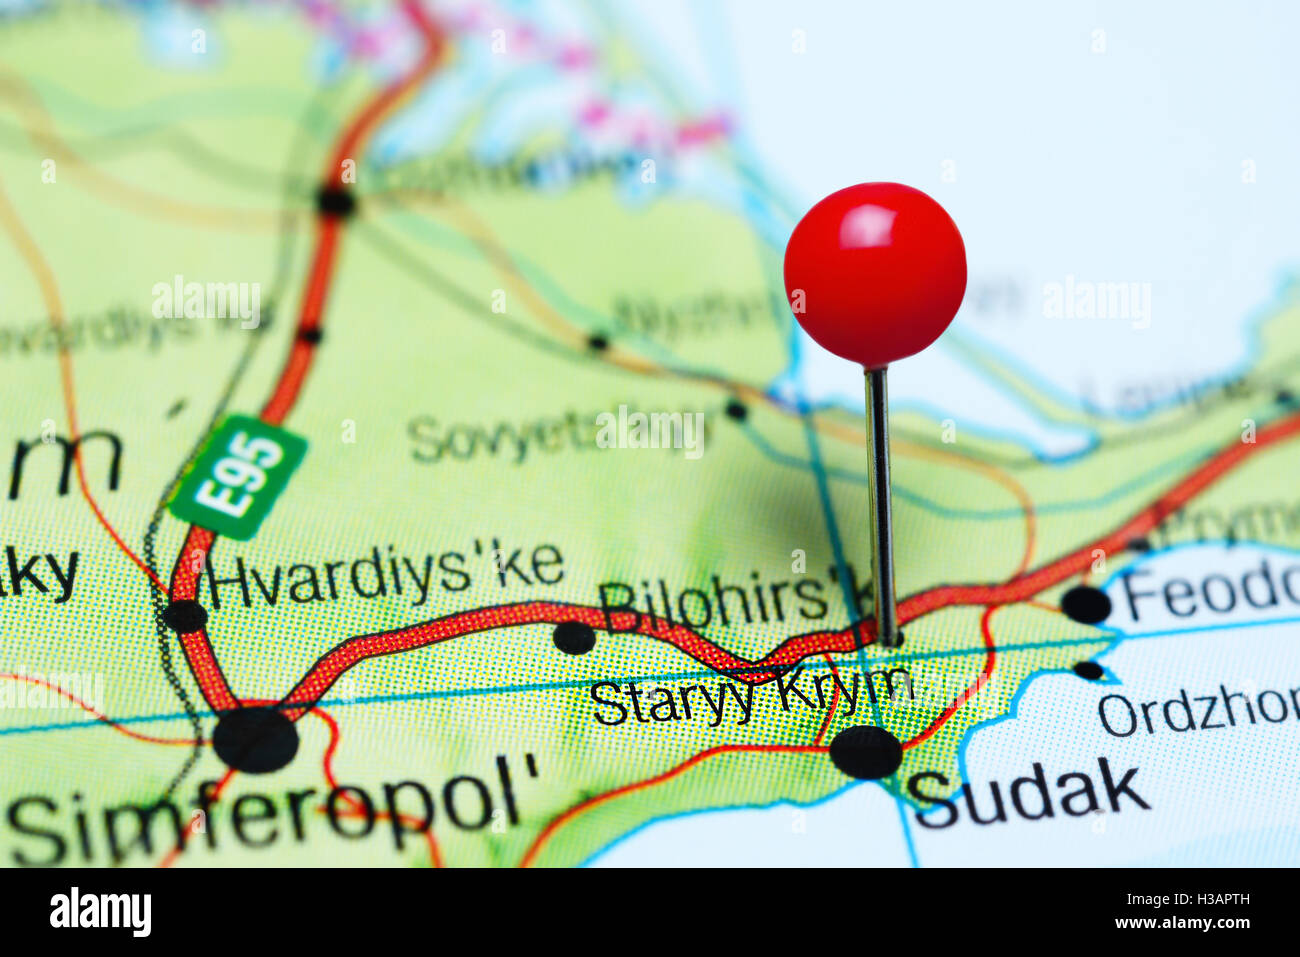 Staryy Krym pinned on a map of Krym Stock Photo